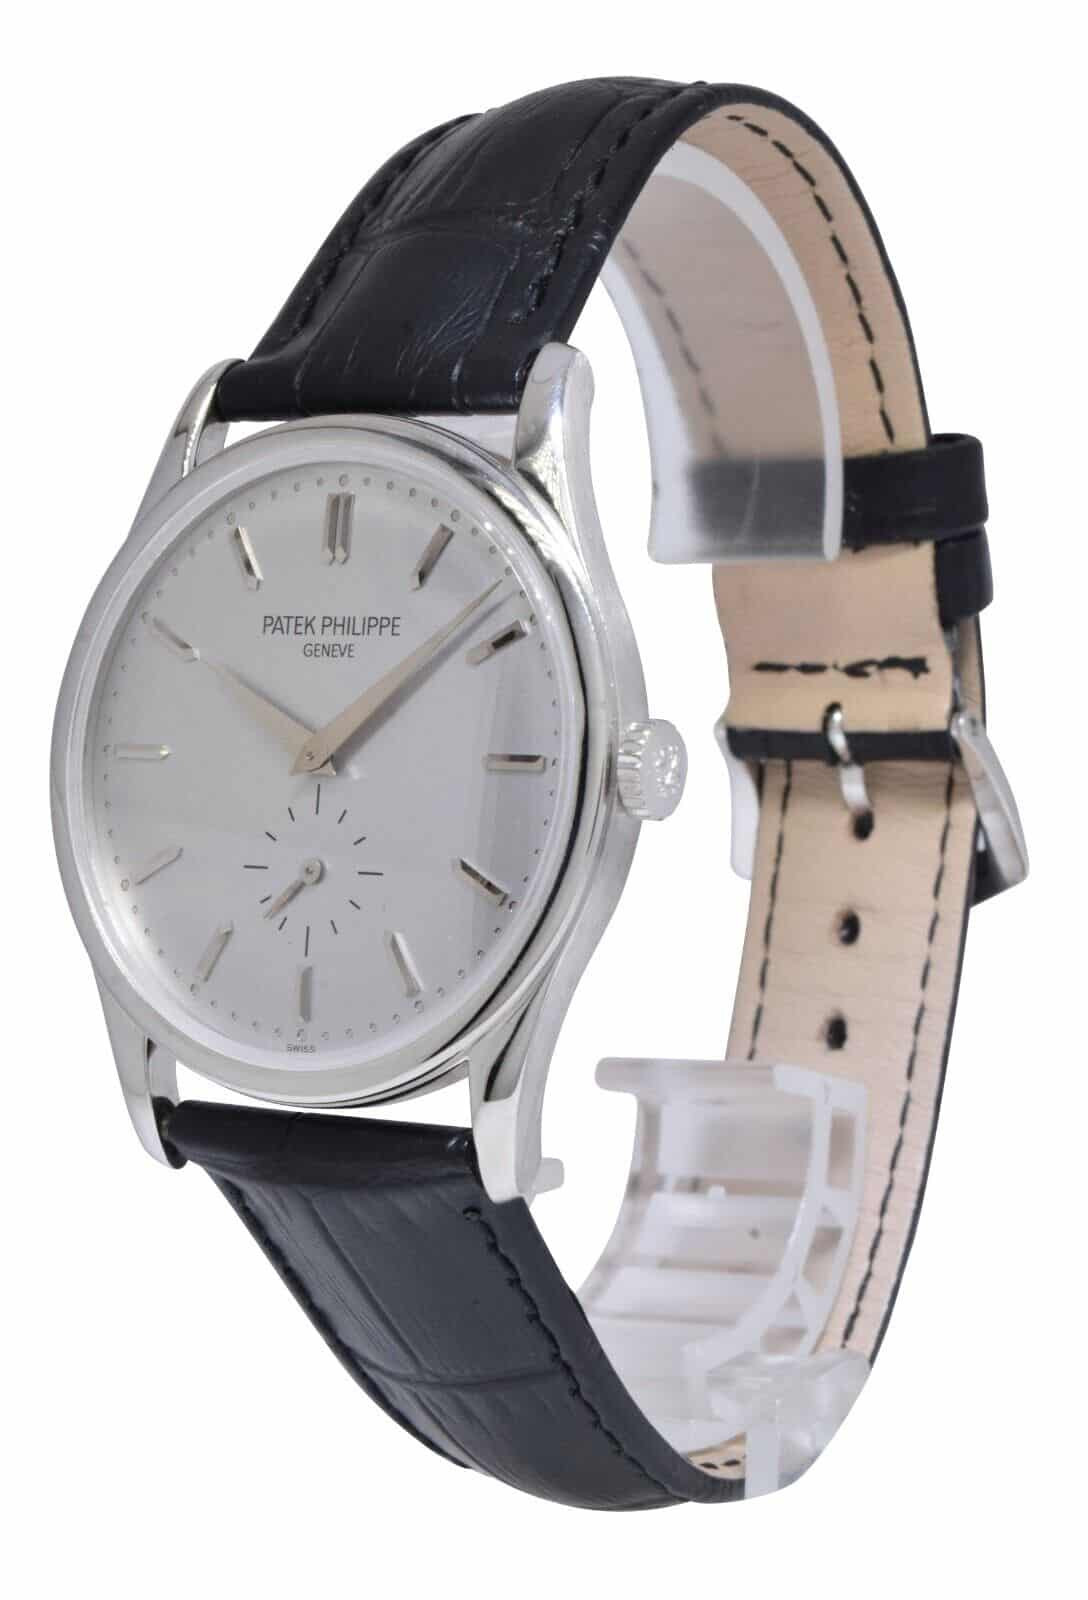 Patek Philippe 5196 Calatrava 18k White Gold Mens 37mm Manual Watch 5196G